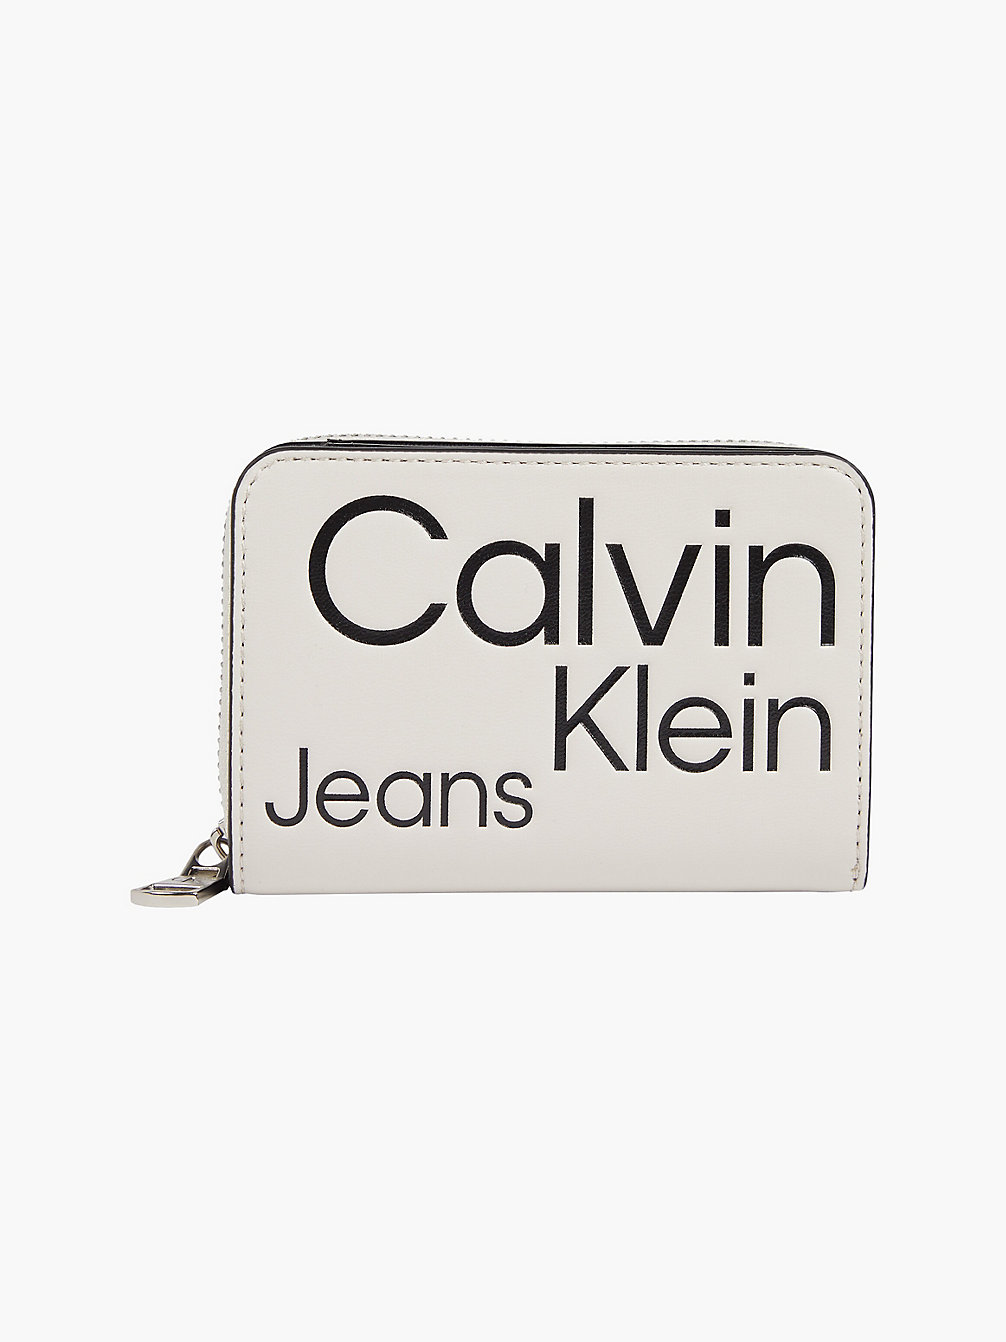 BEIGE AOP Portefeuille Zippé Rfid Avec Logo undefined femmes Calvin Klein